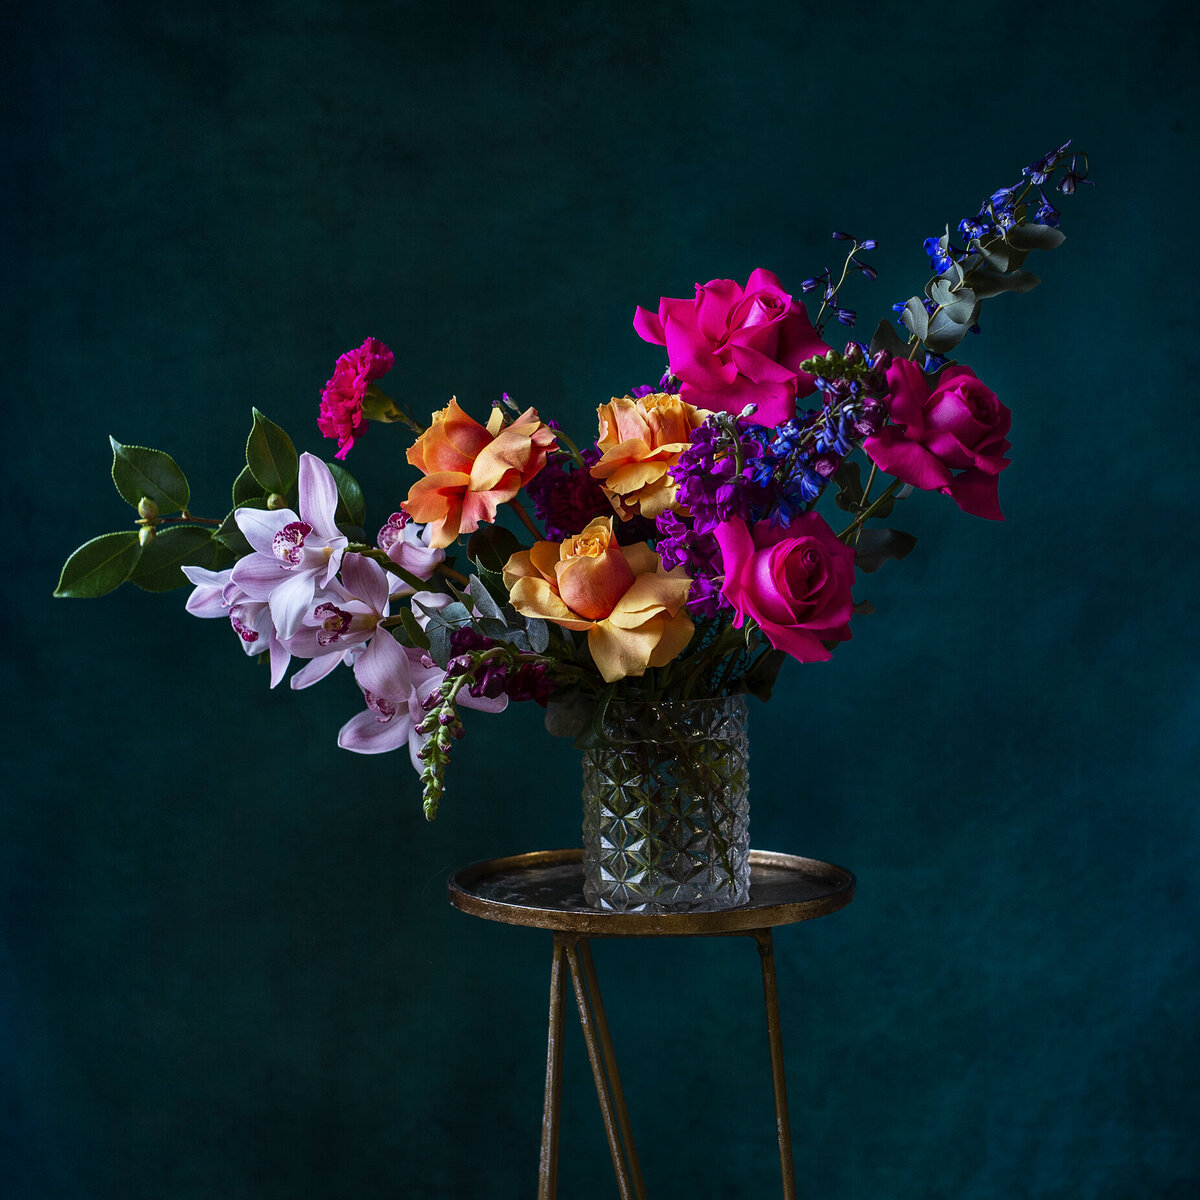 Colourful bouquet of purple, orange, pink, and blue by Foxglove Studio, contemporary Calgary, Alberta wedding florist, featured on the Brontë Bride Vendor Guide.